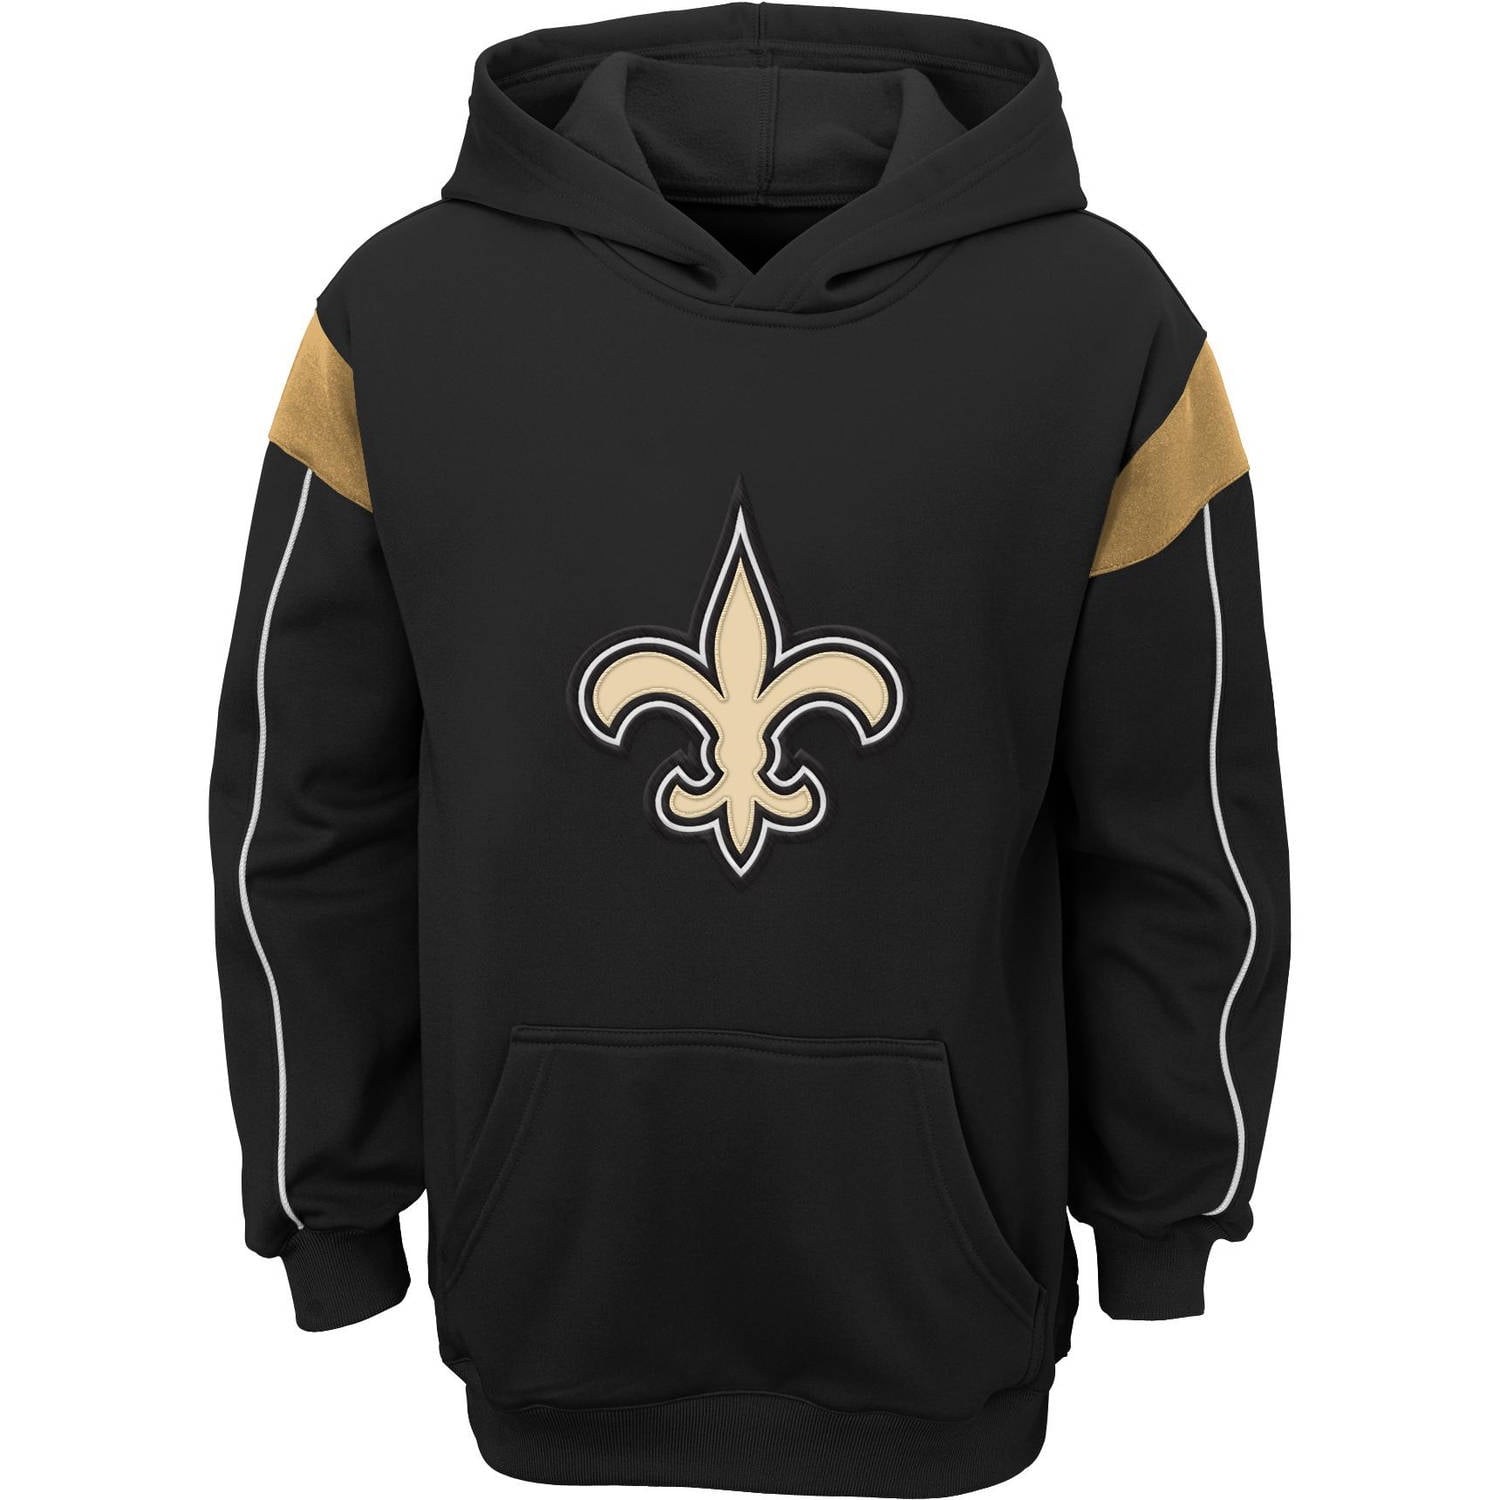 NFL Boys' New Orleans Saints Team Hooded Fleece Top - Walmart.com